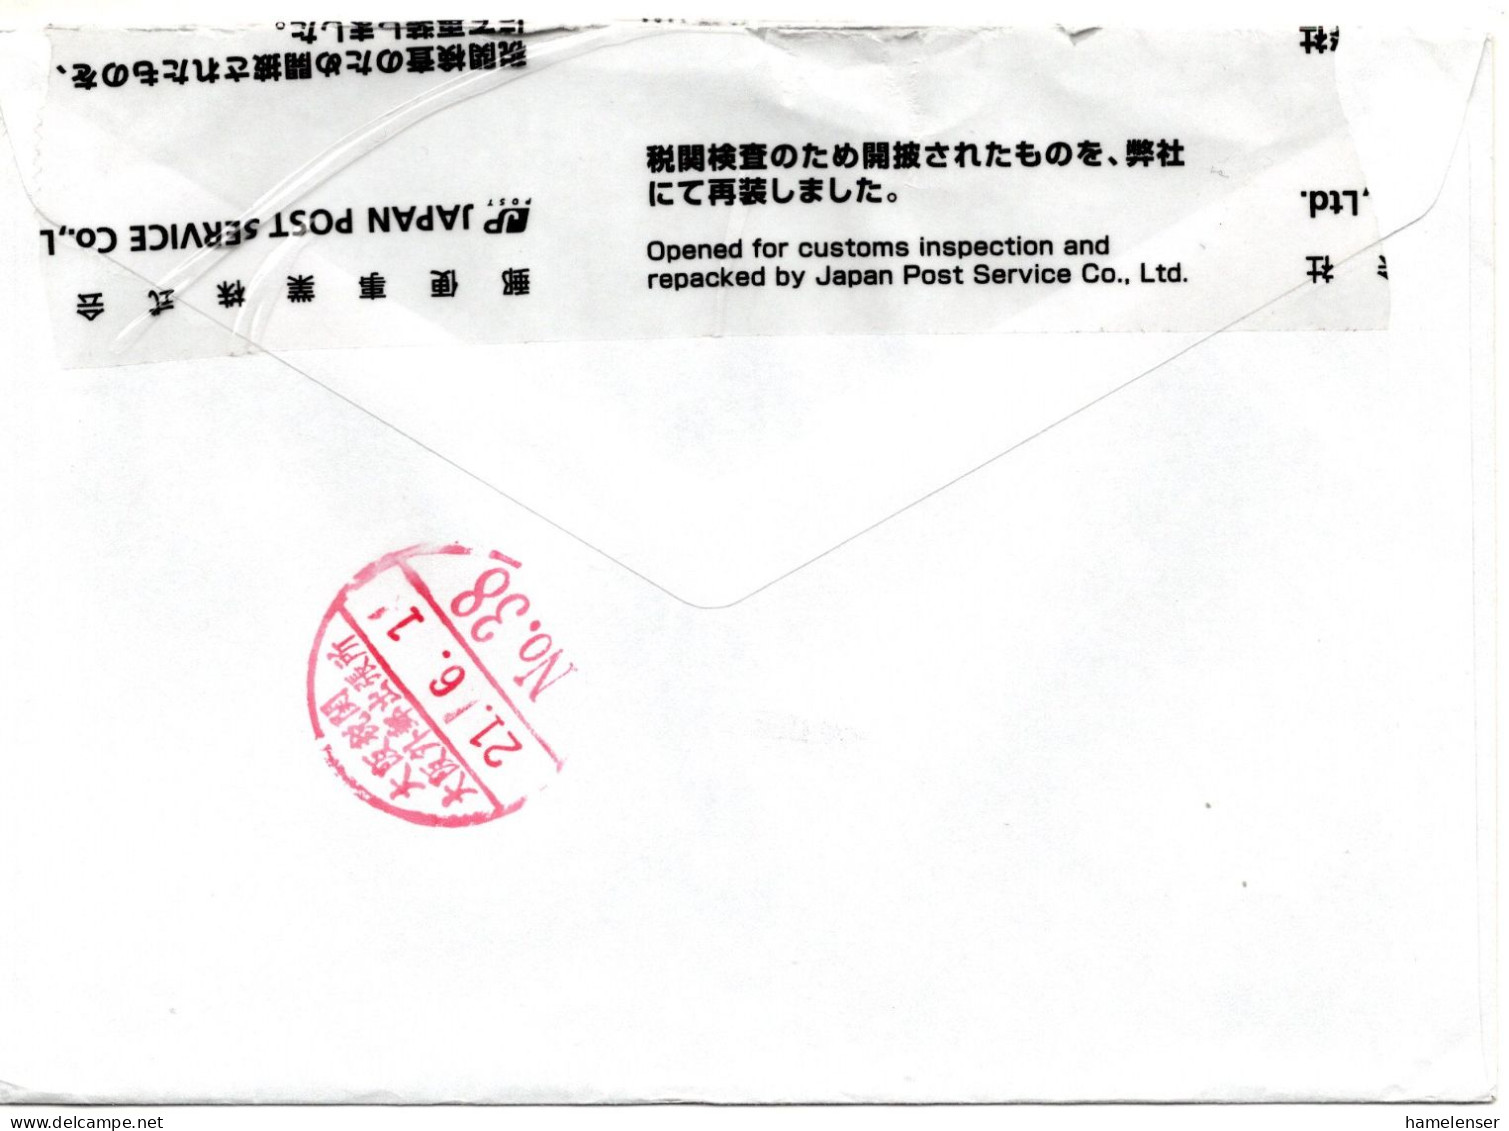 66006 - Niederlande - 2009 - MiF A LpBf Nach Japan, M Niederl Portokontrolle & Japan Zollkontrolle V Zollamt Osaka - Covers & Documents